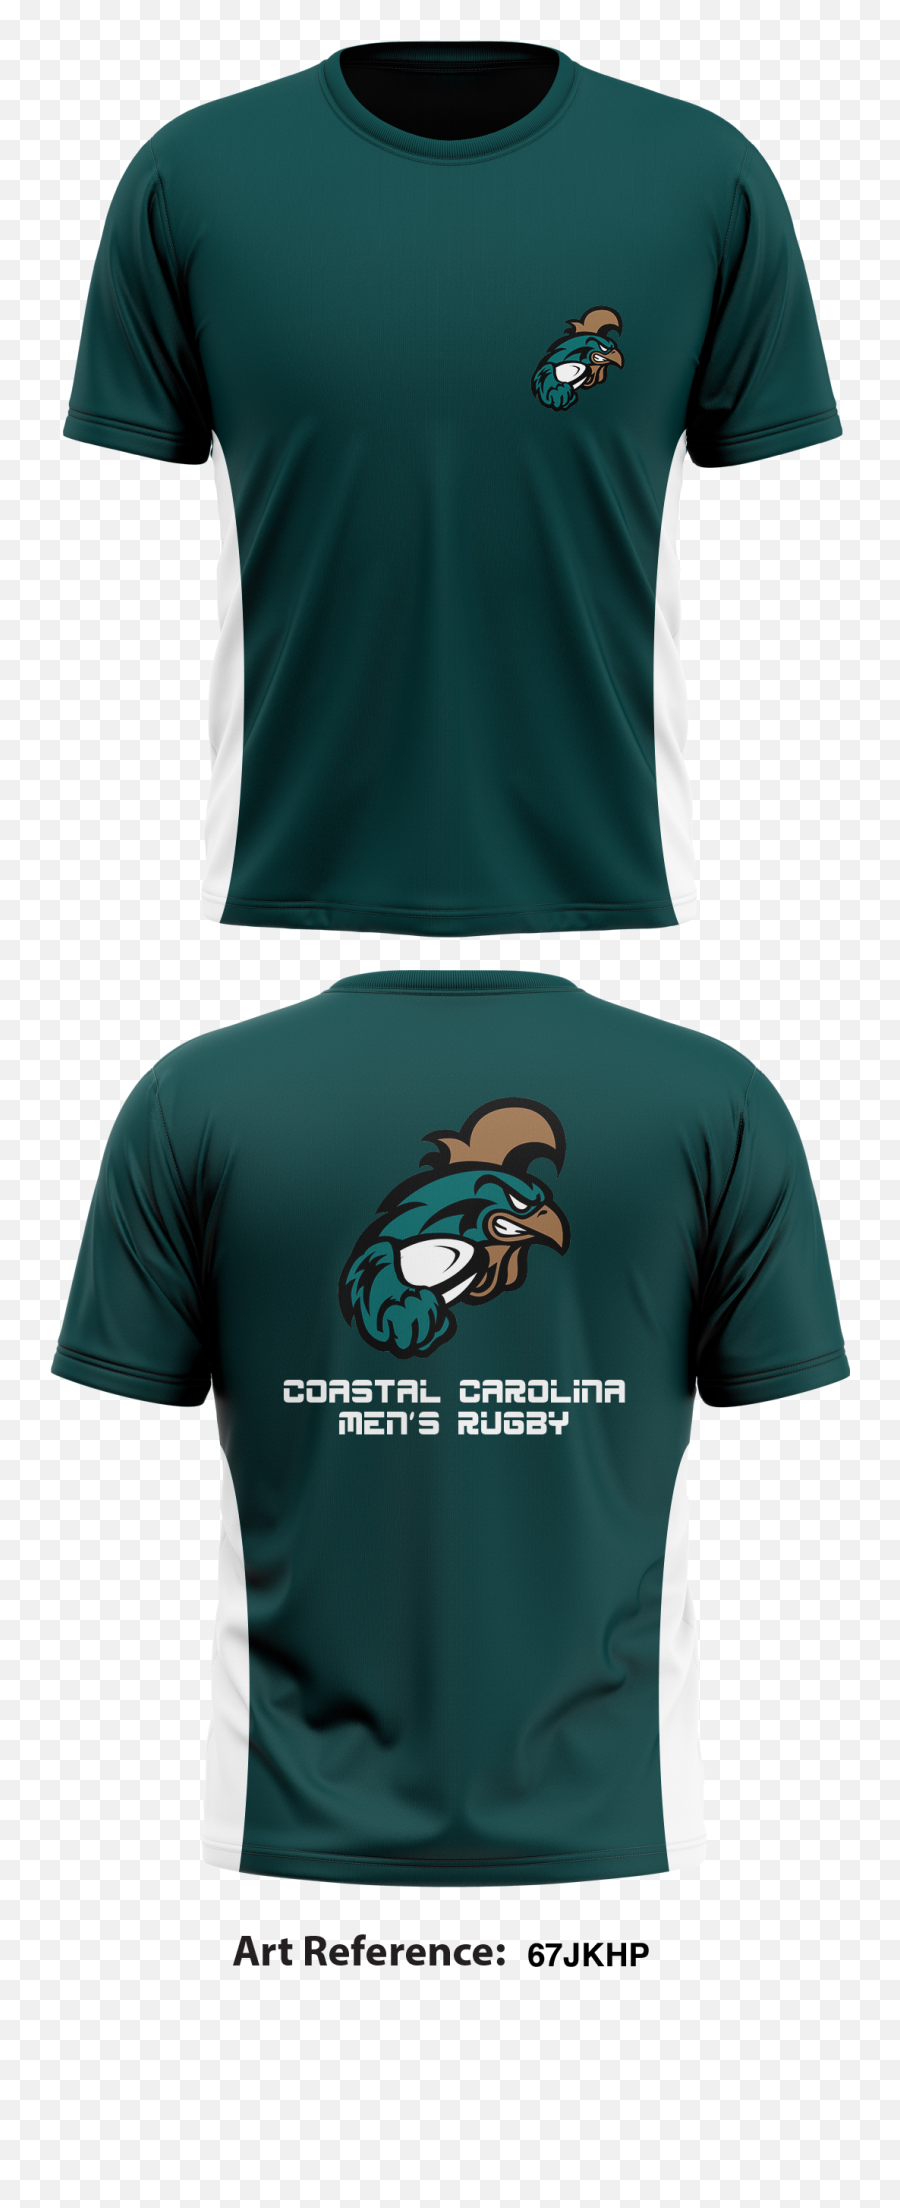 Coastal Carolina Mens Rugby - Operation Inherent Resolve Shirt Emoji,Coastal Carolina Logo